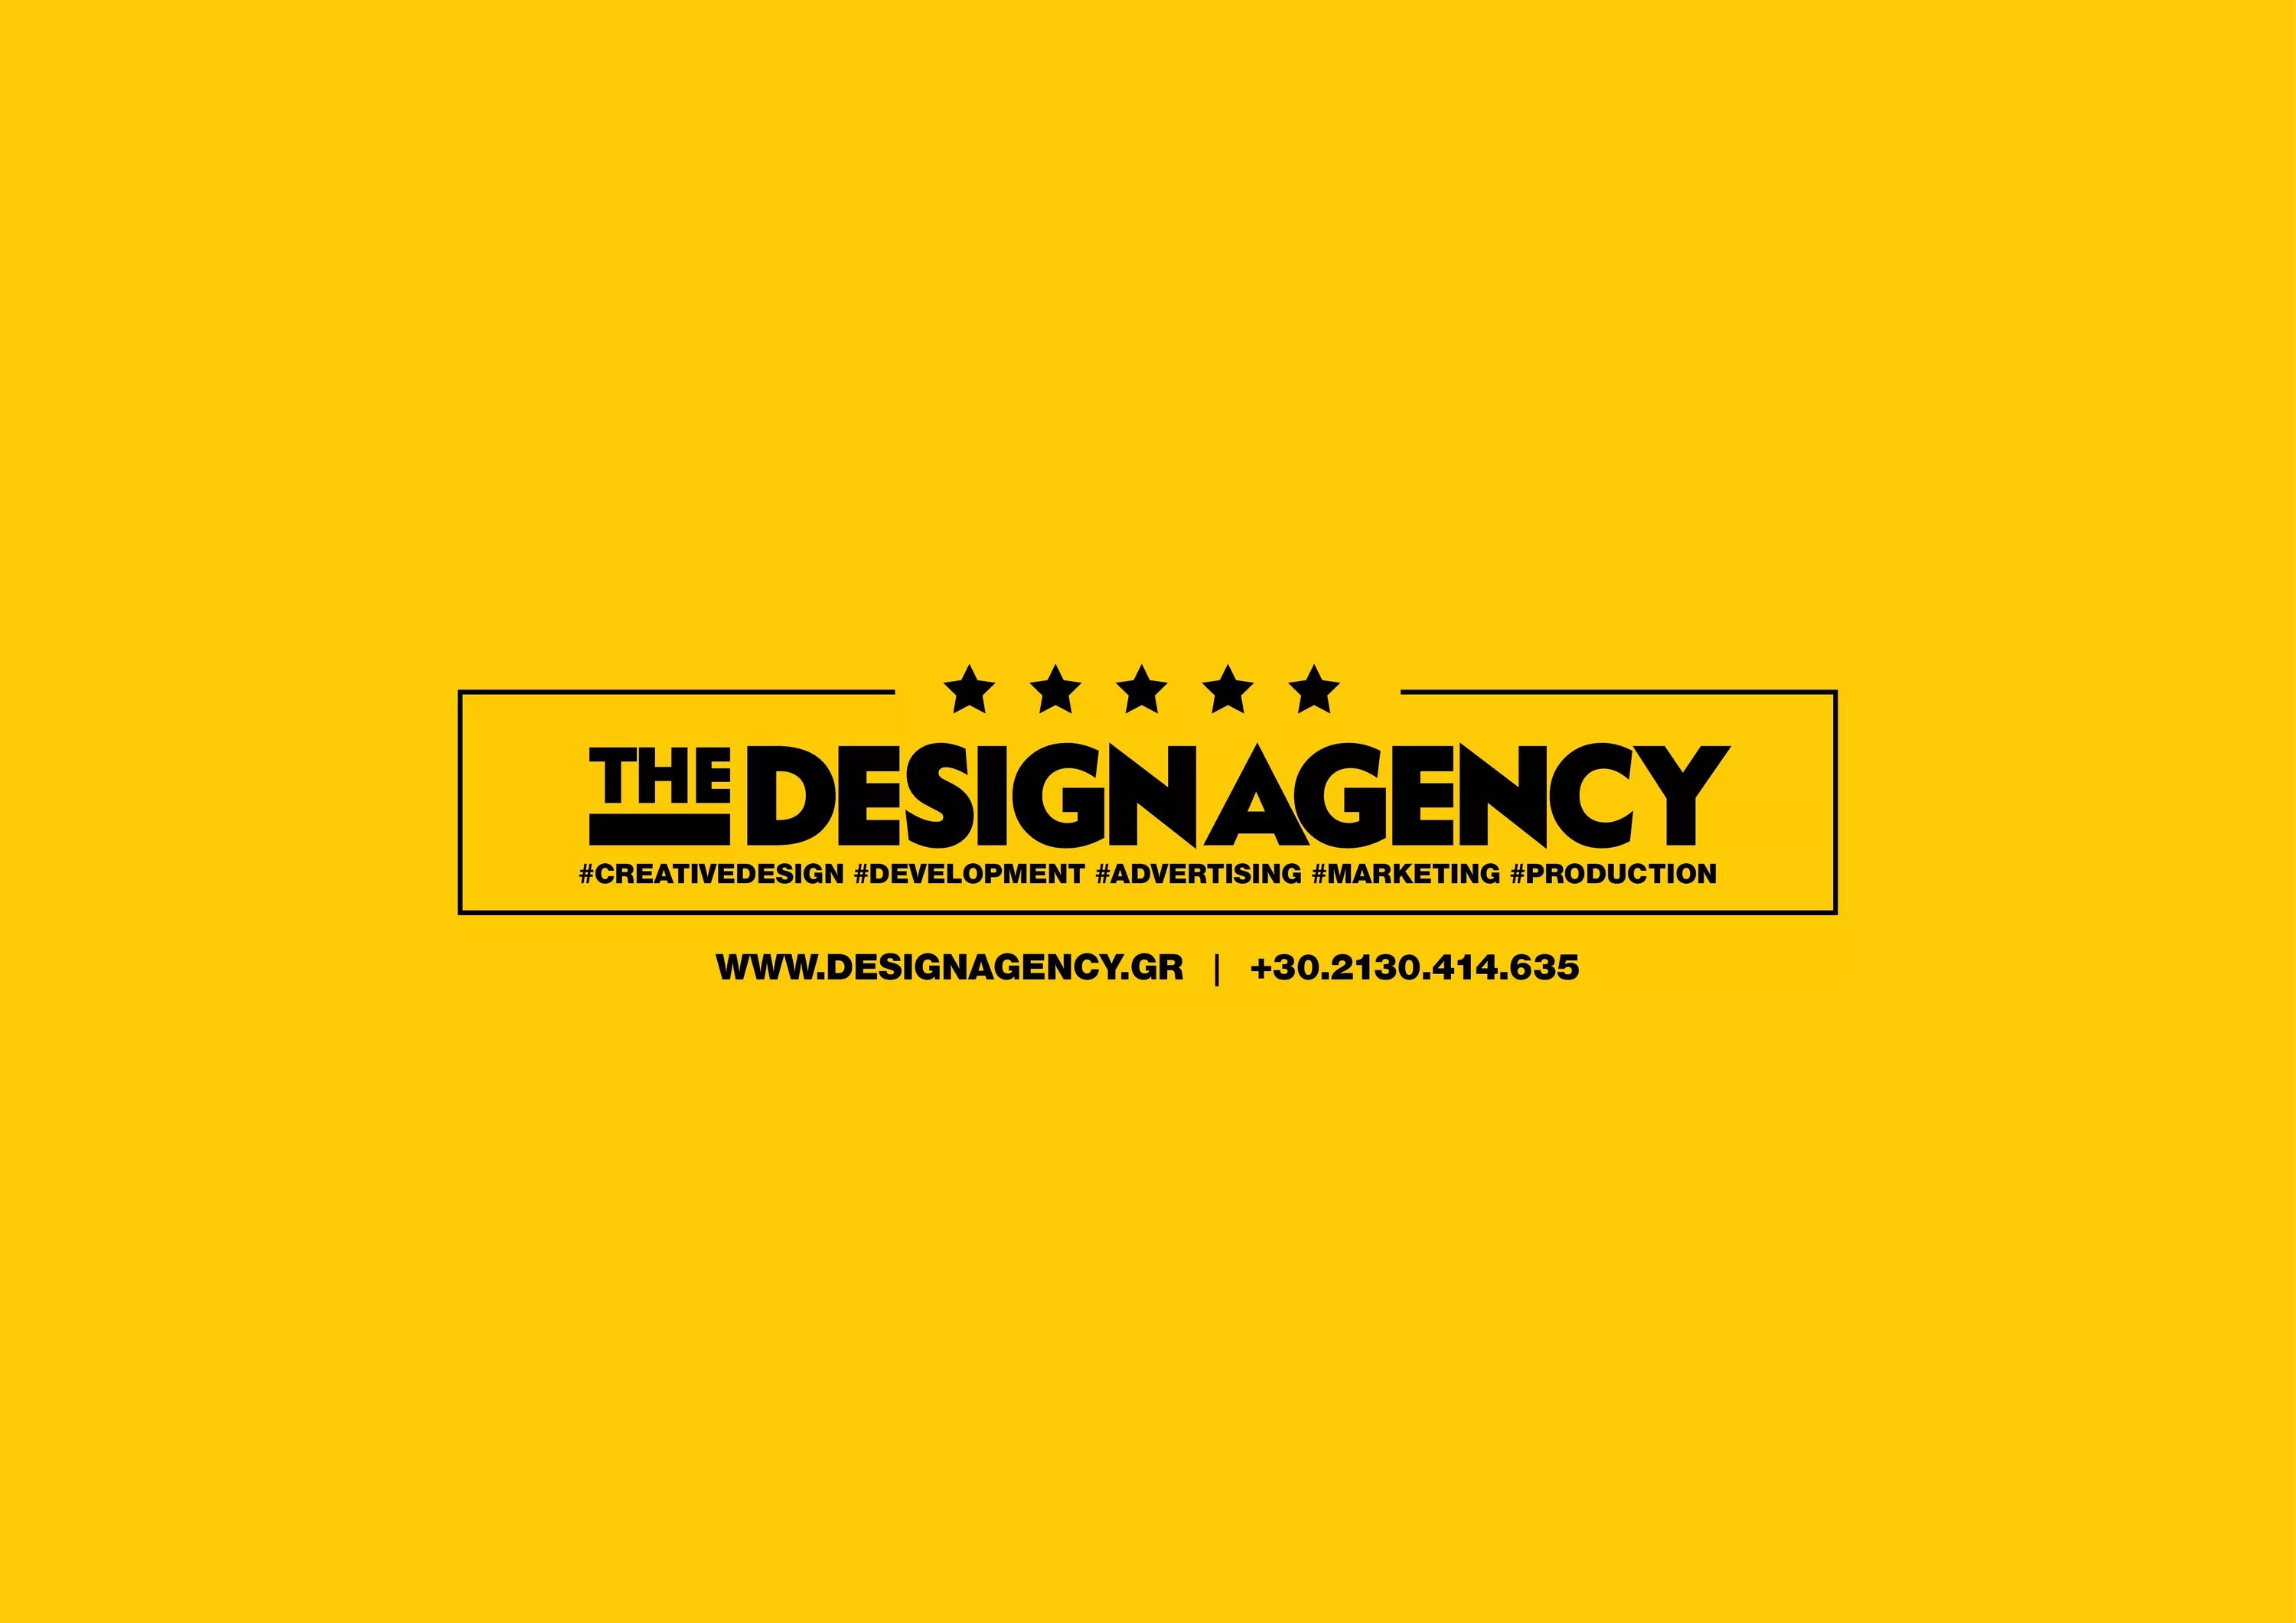 Рекламное агентство лого. Логотип рекламного агентства. Название рекламного агентства. Баннер рекламного агентства.